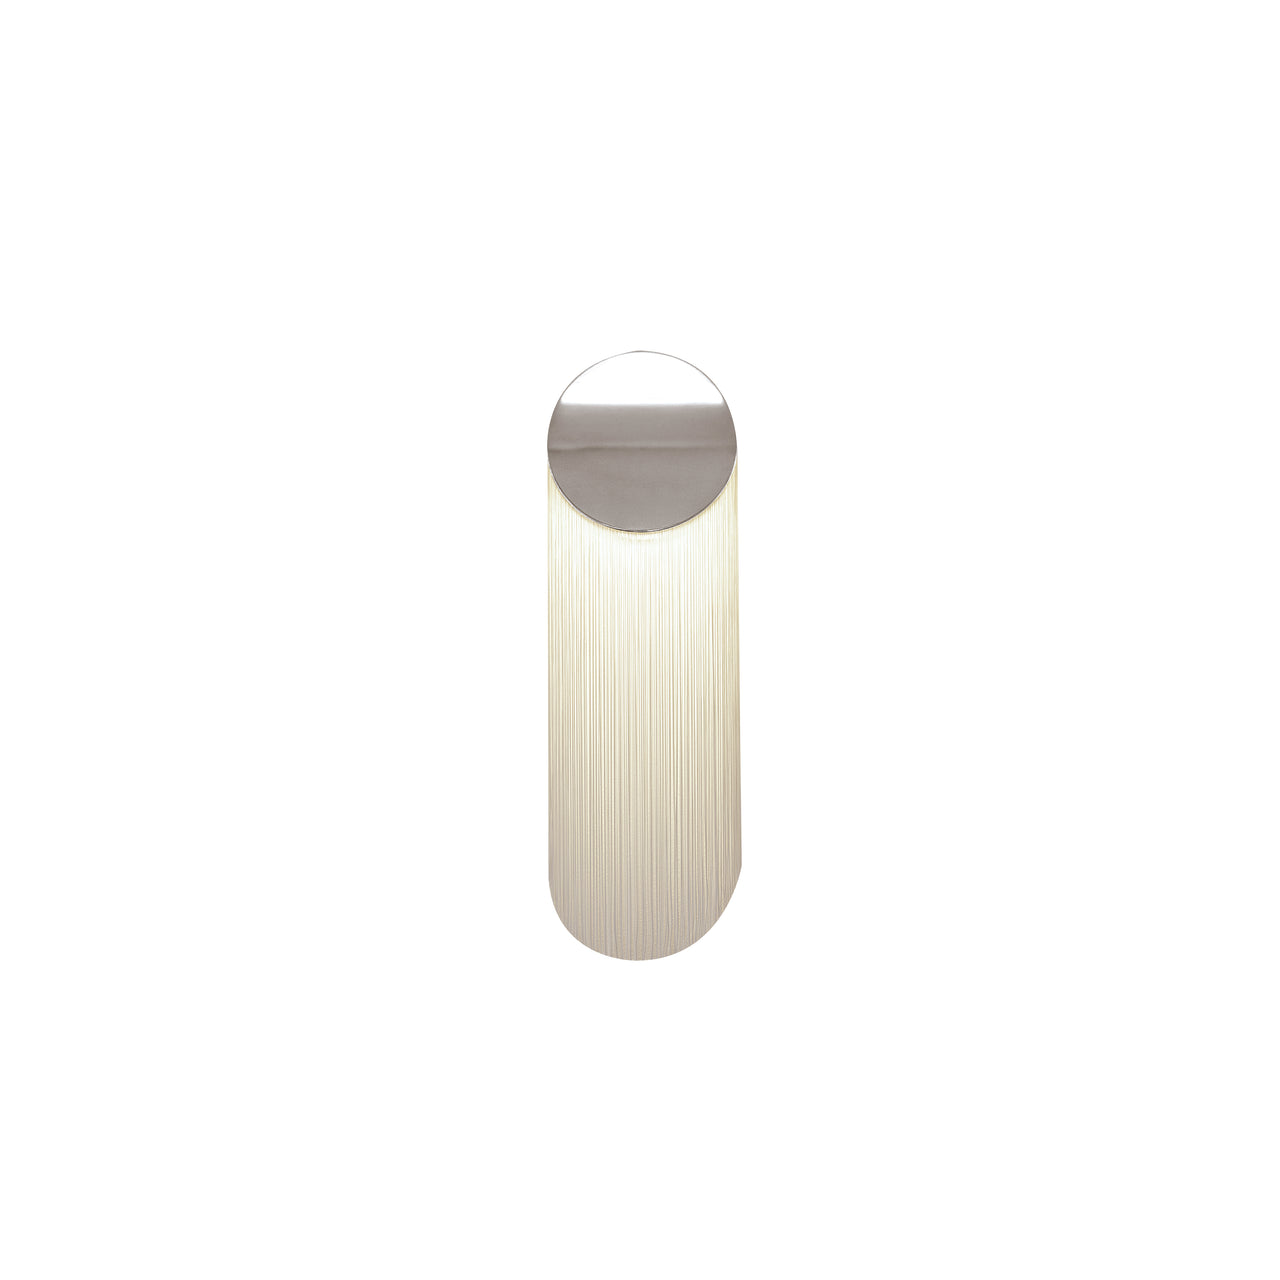 Ce Petite Wall Lamp: Chrome + Natural White + Short